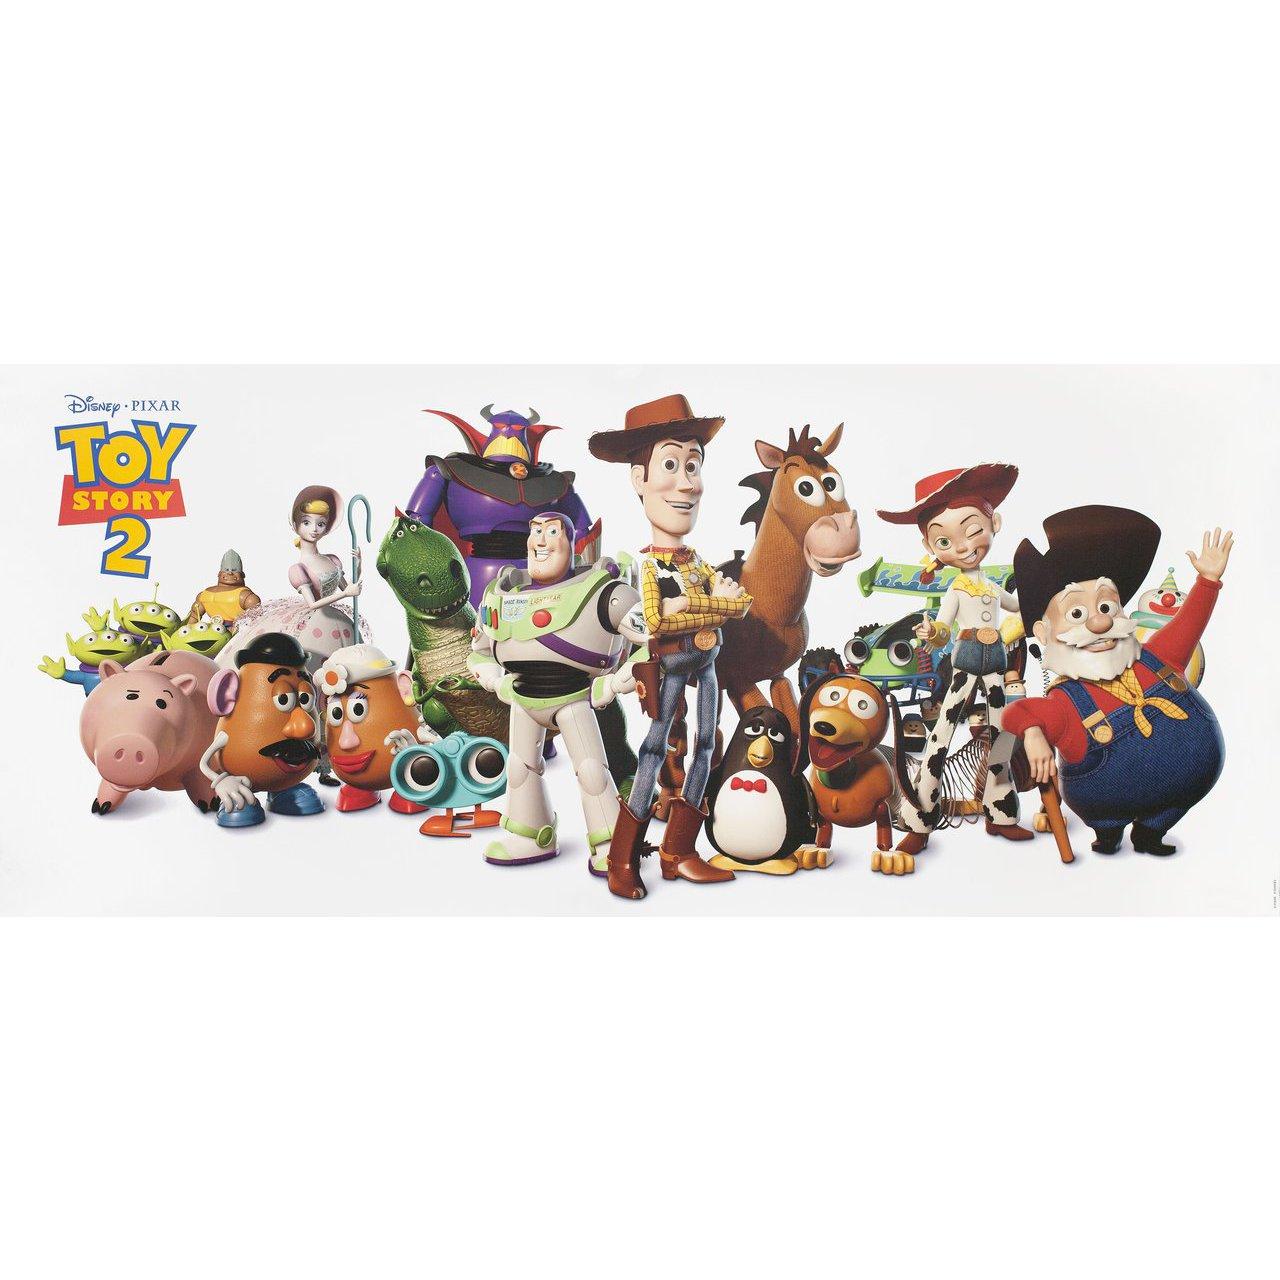 Toy Story 2 1999 U.S. Film Poster